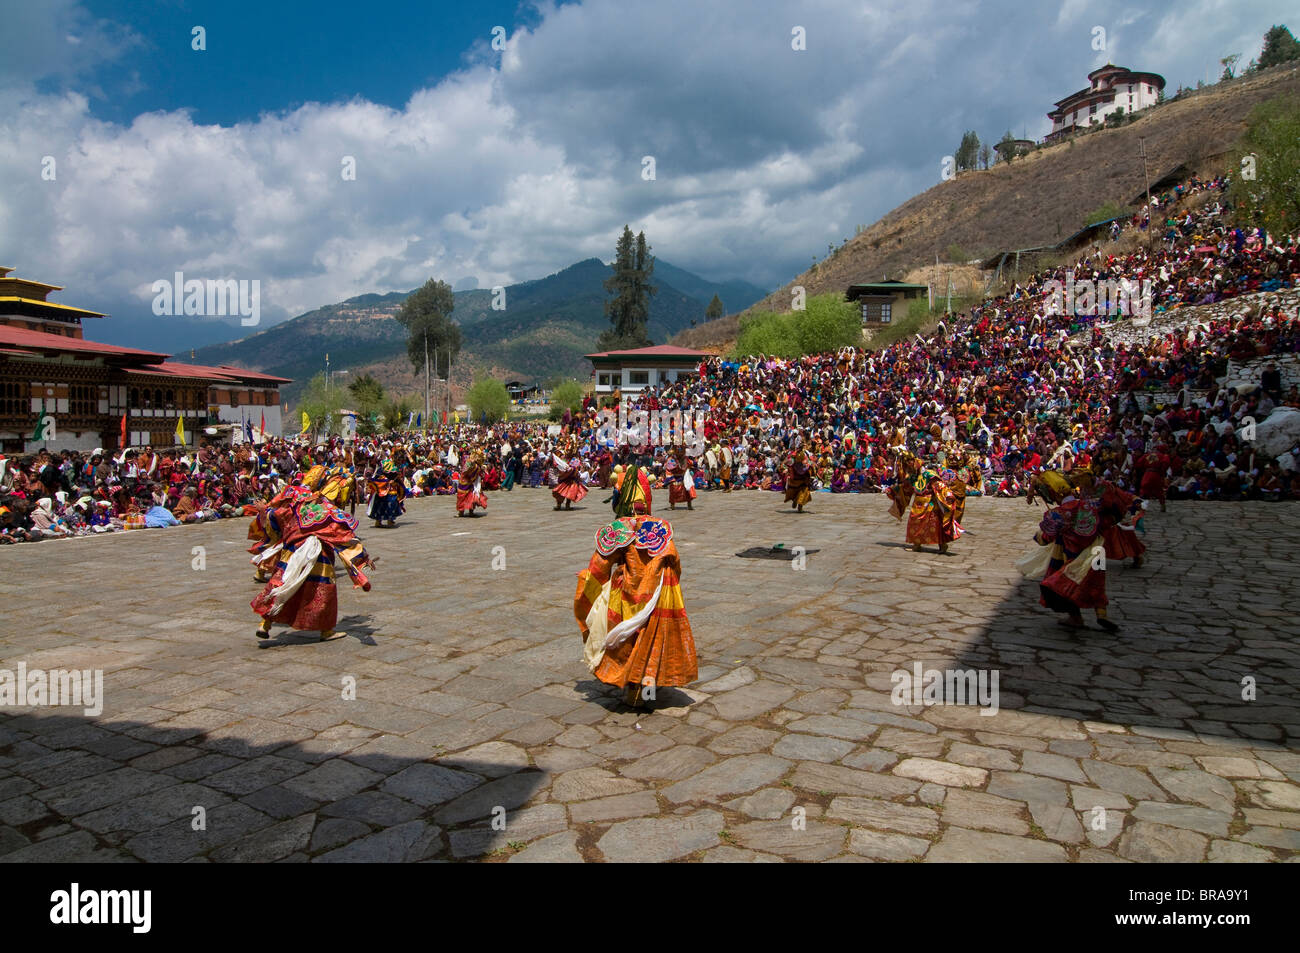 Costumed dancers at religious festival with many visitors, Paro Tsechu, Paro, Bhutan, Asia Stock Photo